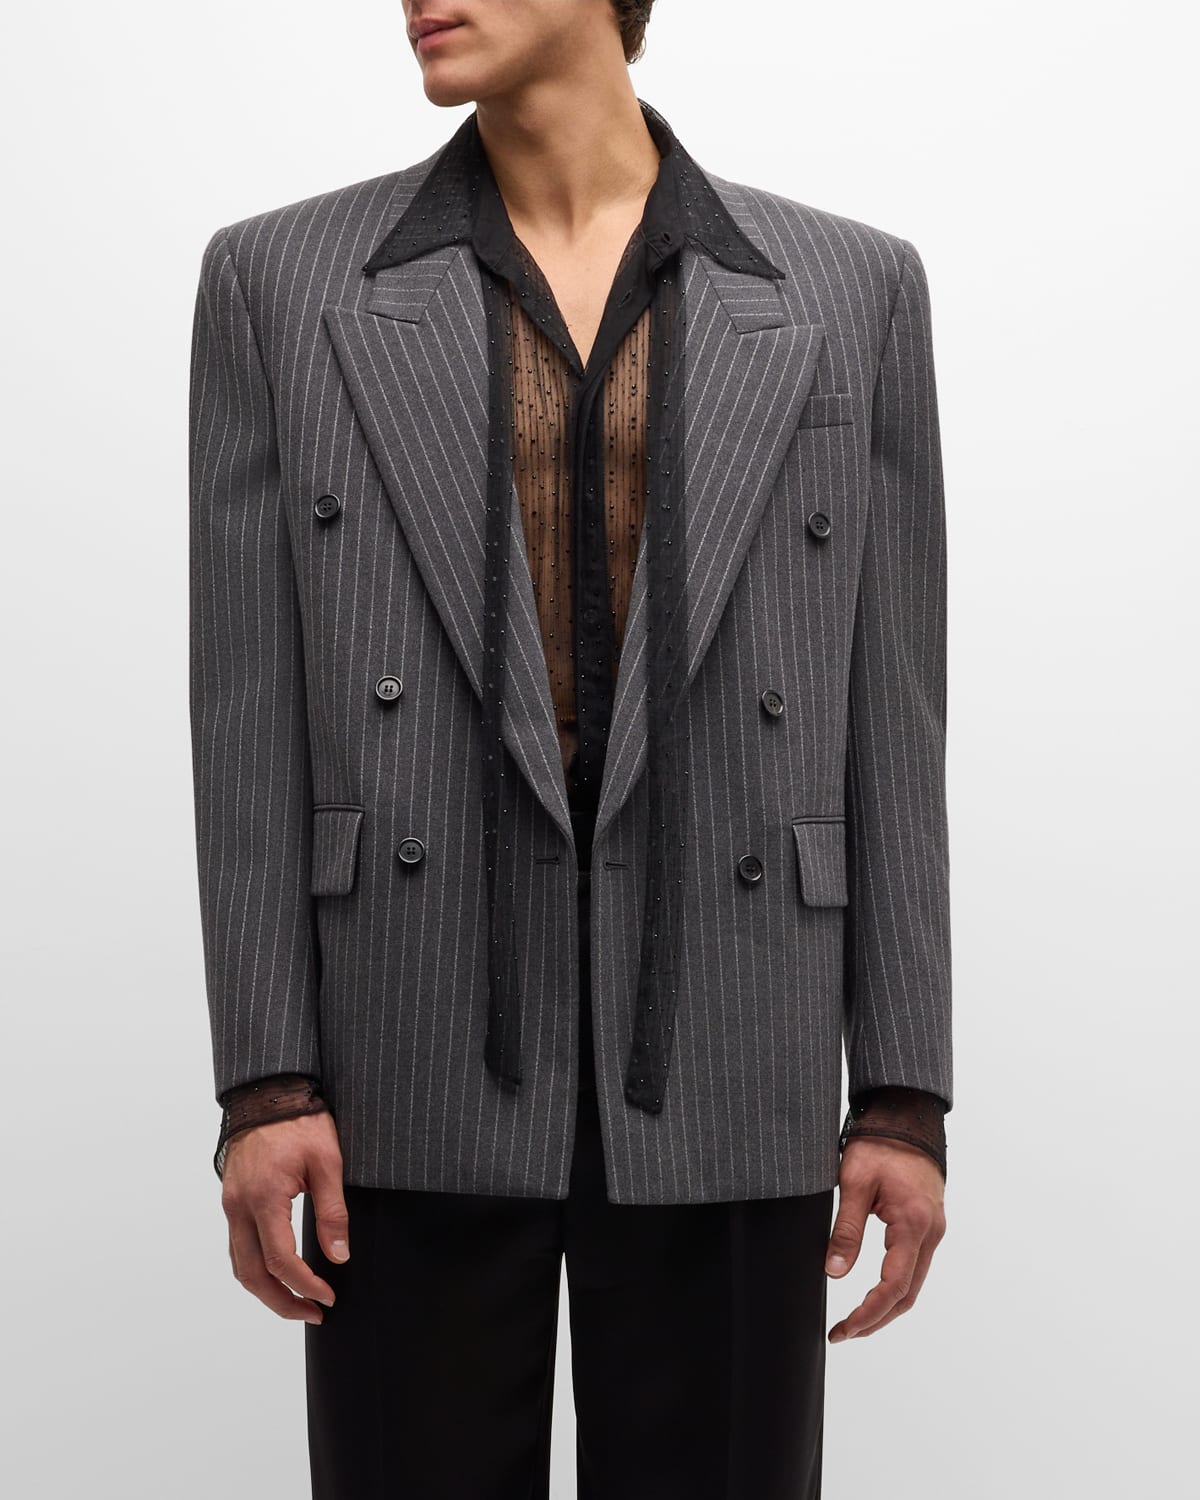 Men's Double-Breasted Pinstripe Sport Coat